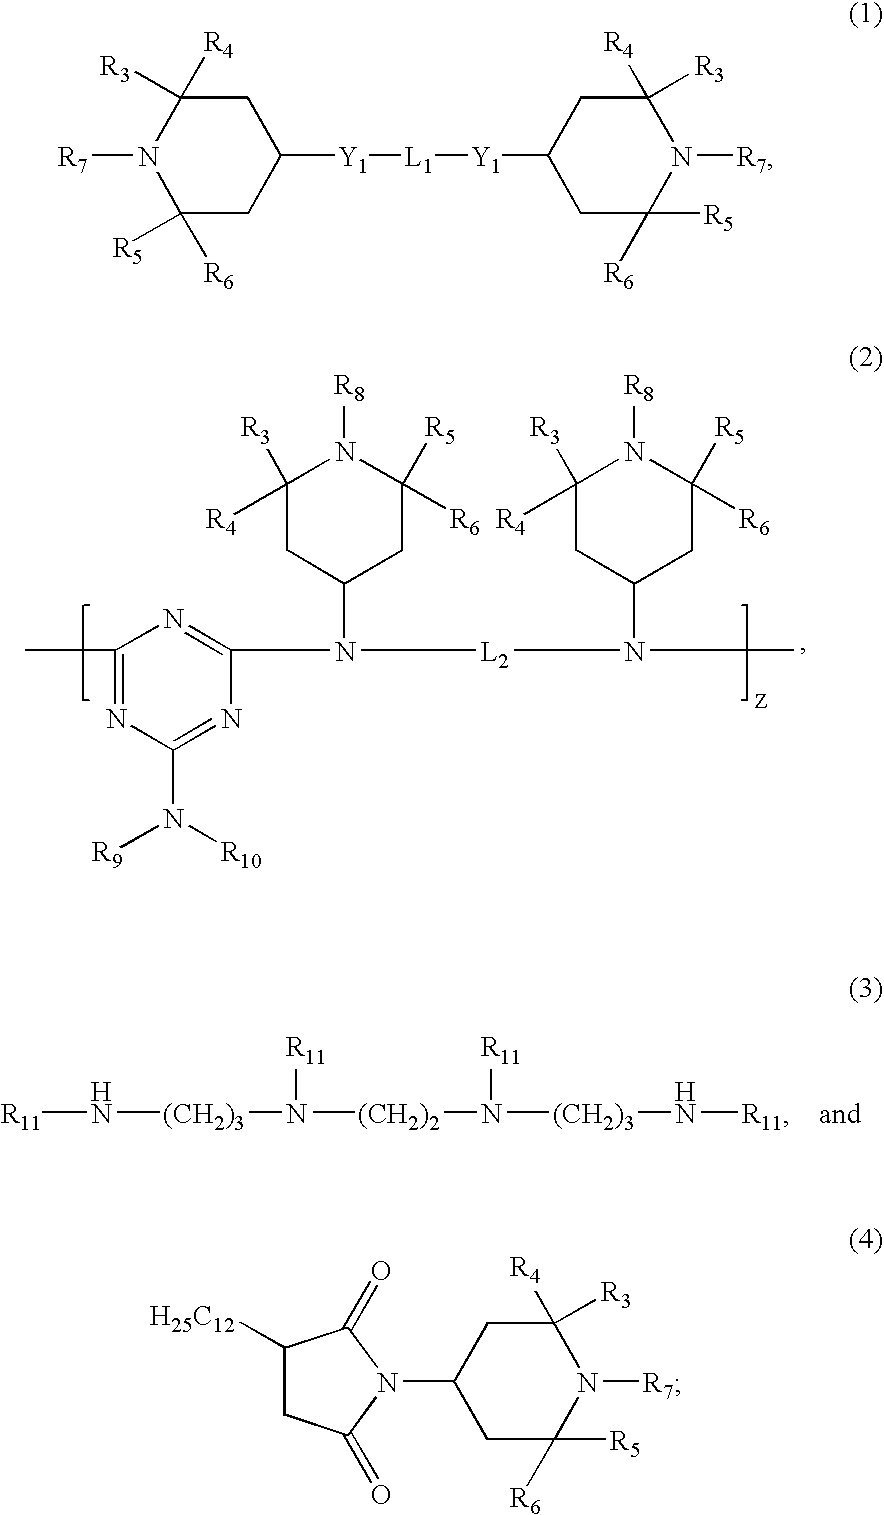 Certain polyester compositions which comprise cyclohexanedimethanol, moderate cyclobutanediol, cyclohexanedimethanol, and high trans cyclohexanedicarboxylic acid